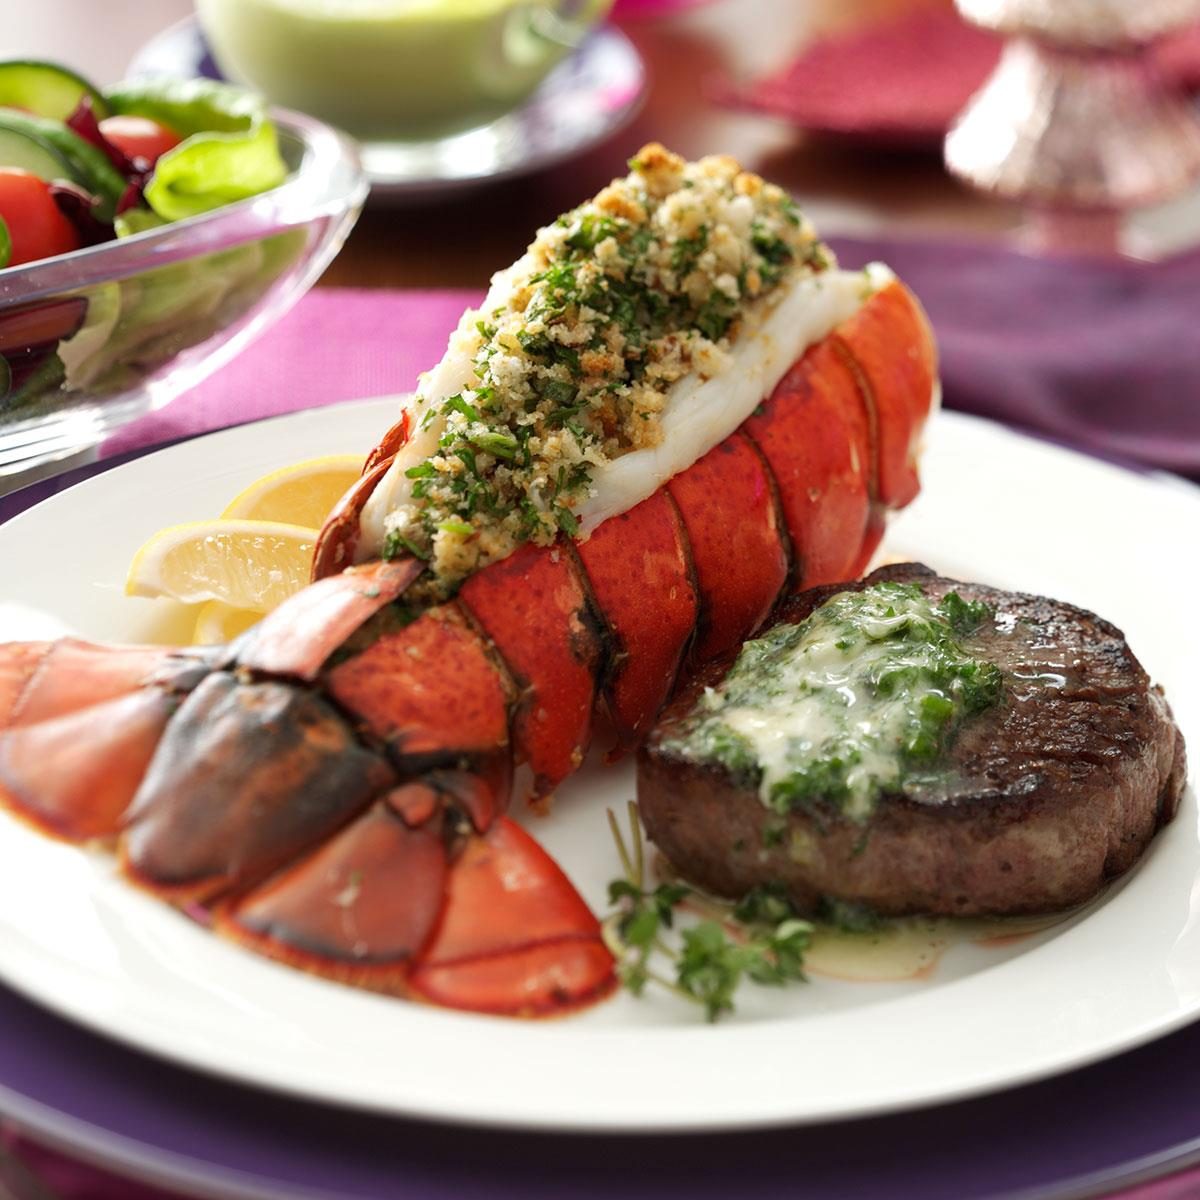 steak and lobster dinner menu ideas